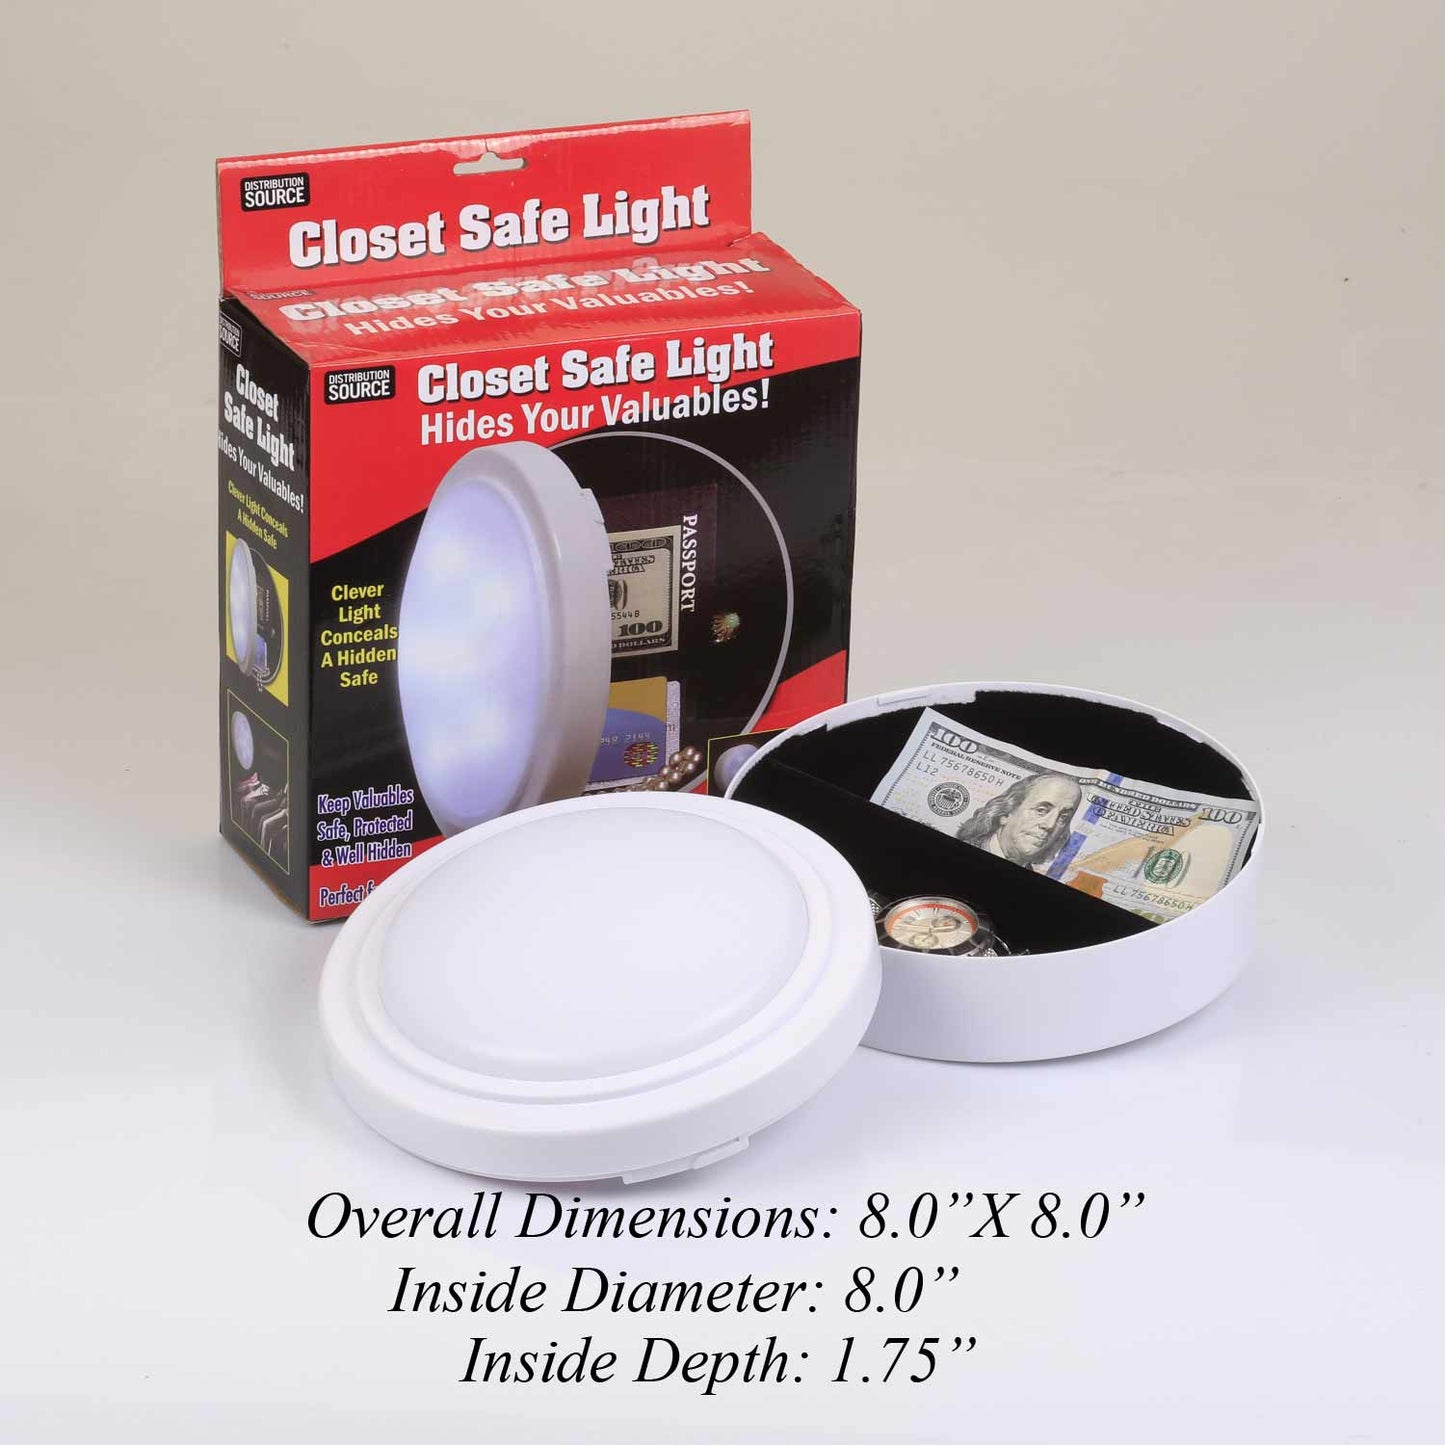 Closet Safe Light Home Concealment Diversion Safe Stash Safe - Concealment Cans